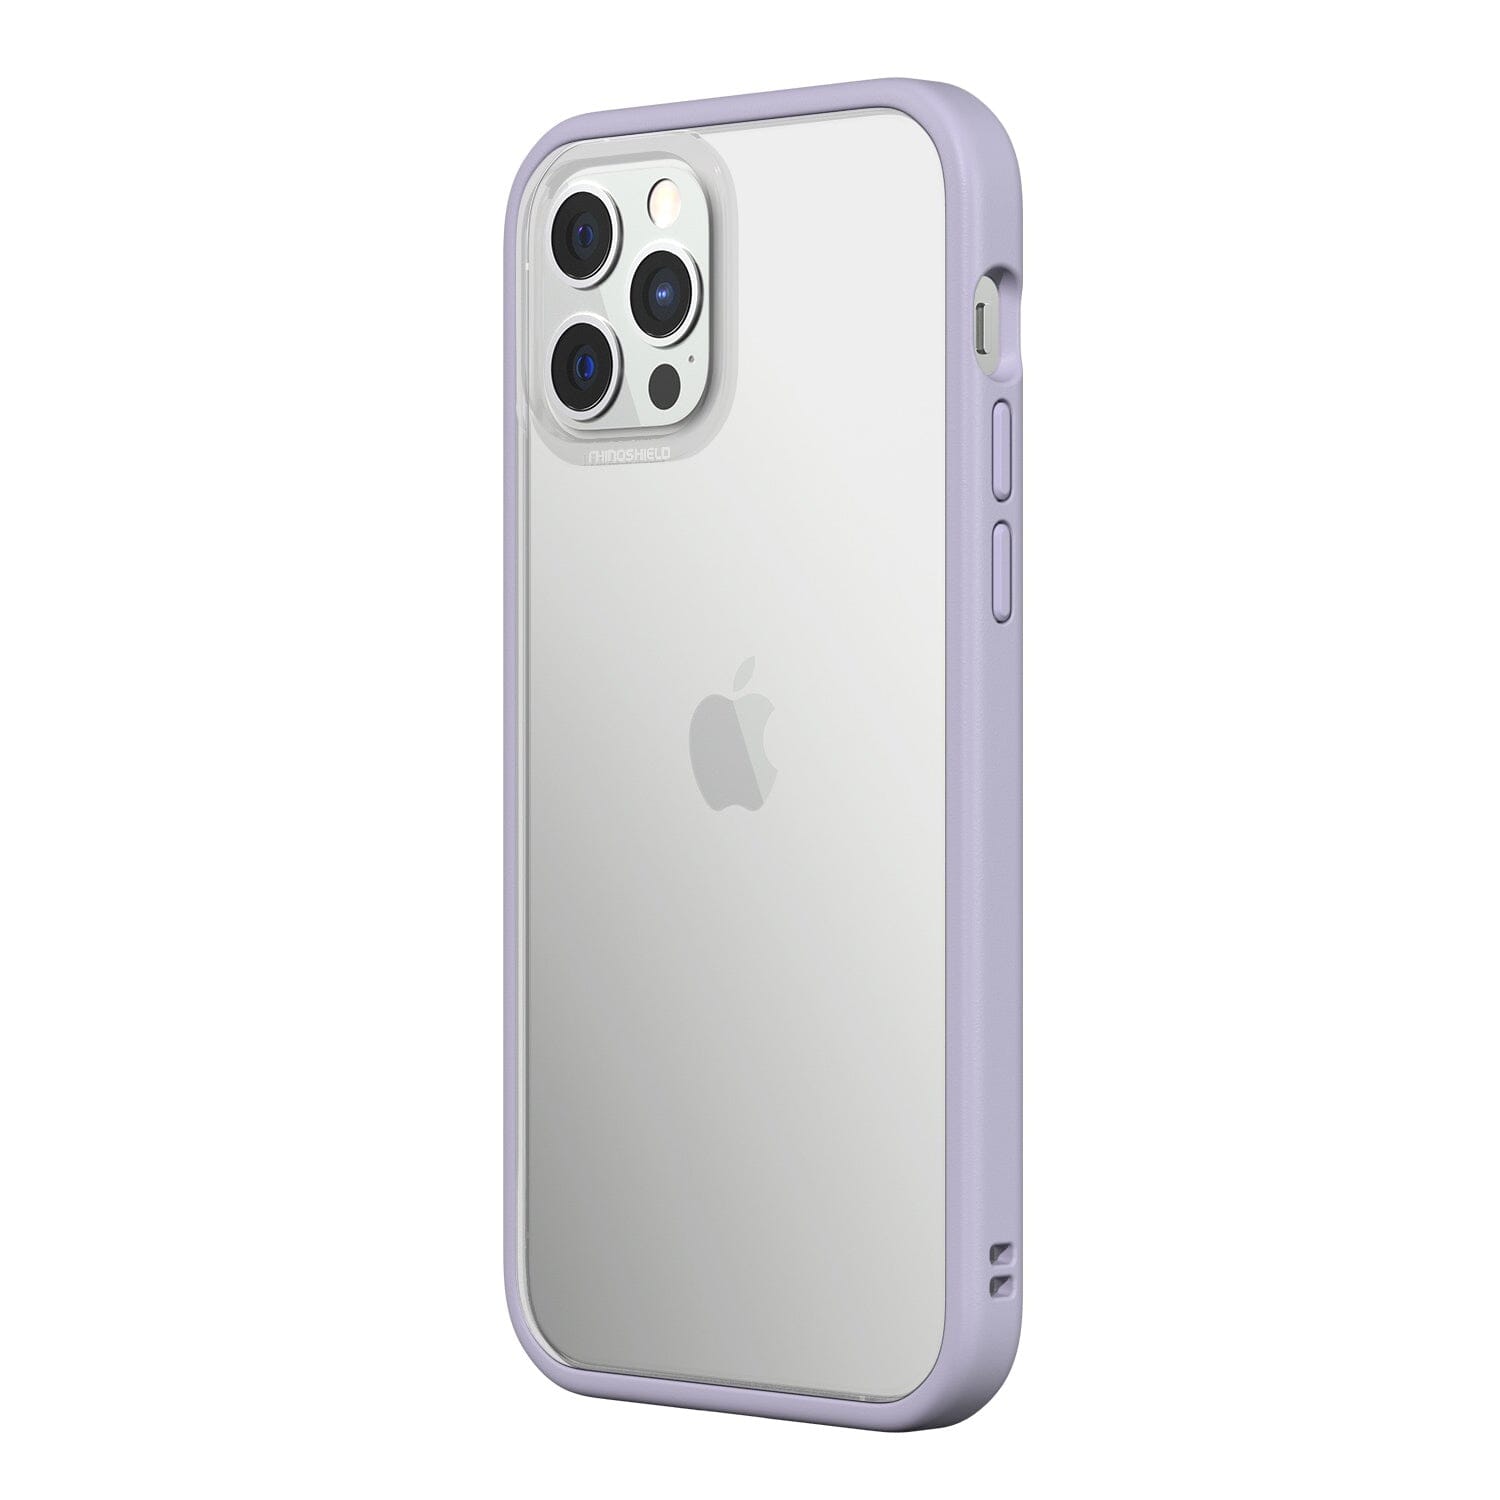 RhinoShield Mod NX Modular Case for iPhone 12 Series (2020) iPhone 12 Series RhinoShield iPhone 12/12 Pro 6.1" Lavender 